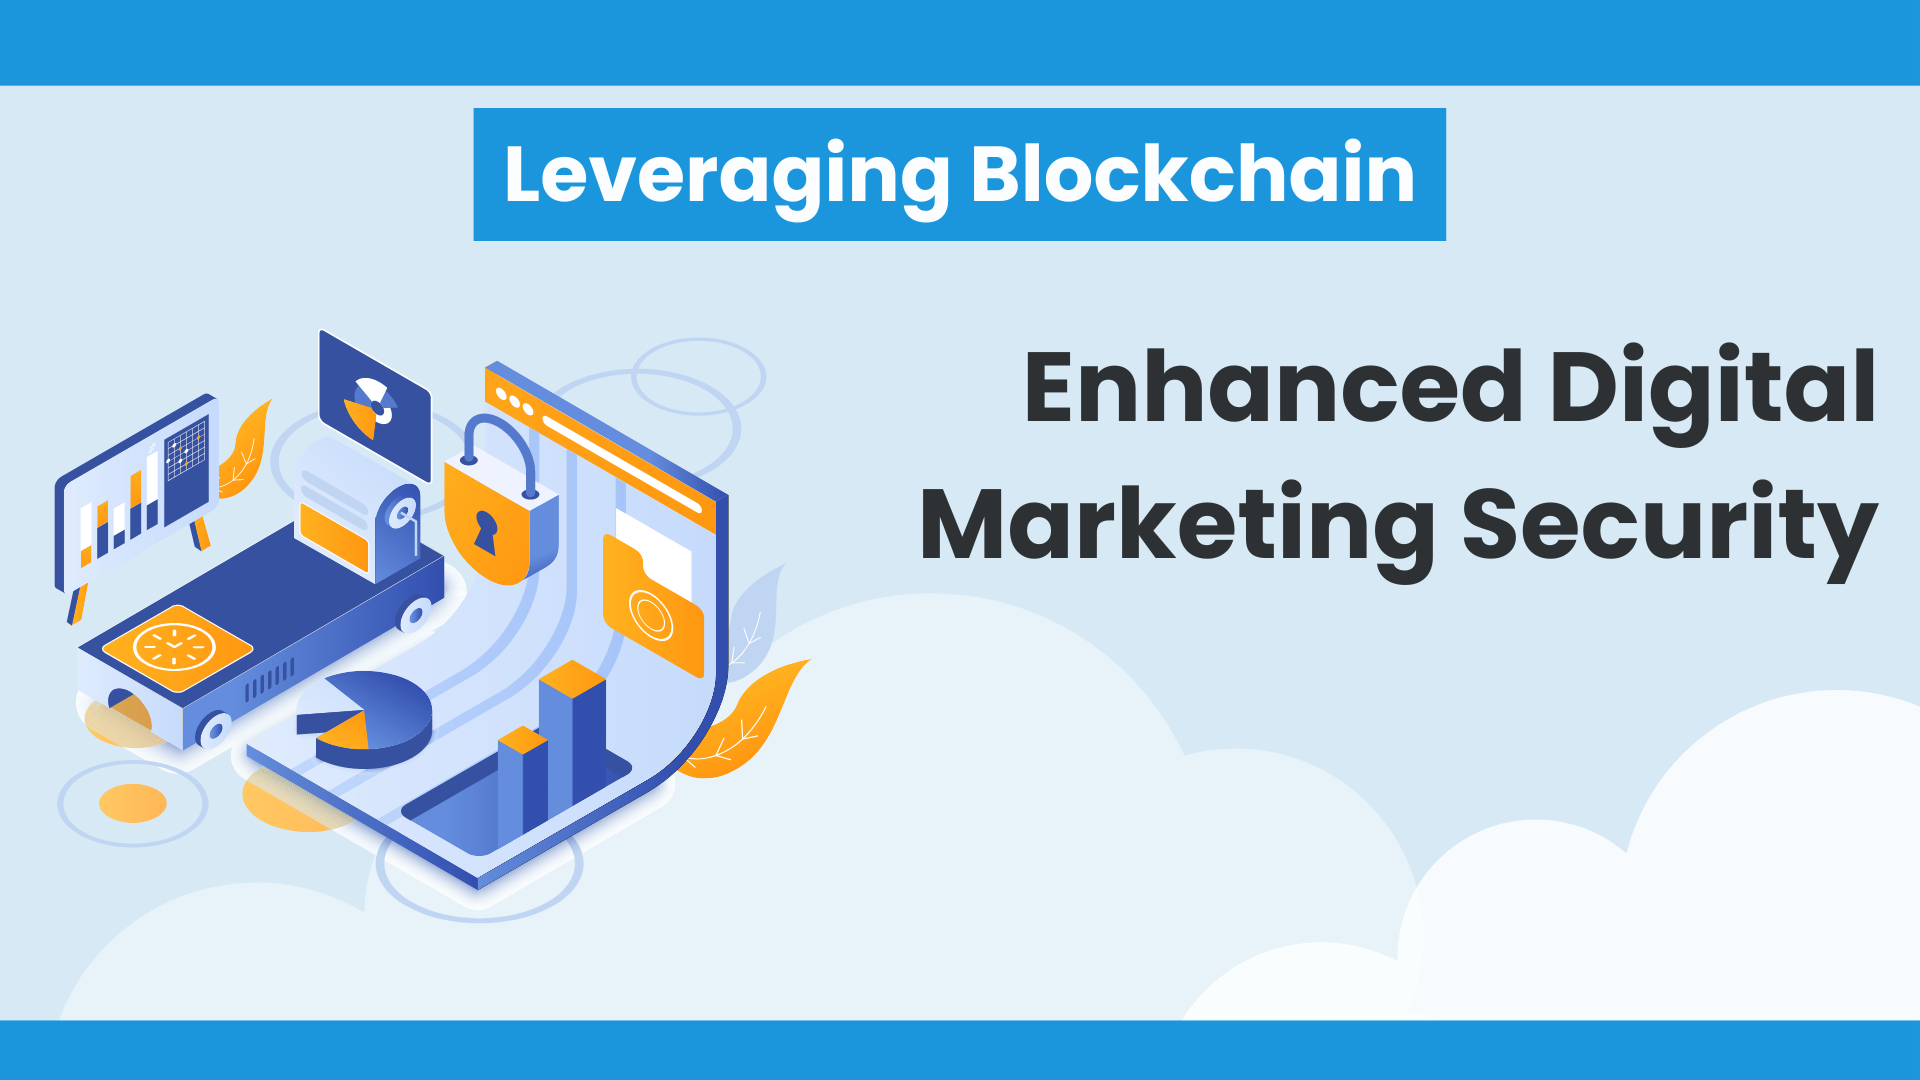 Leveraging Blockchain for Enhanced Digital Marketing Security